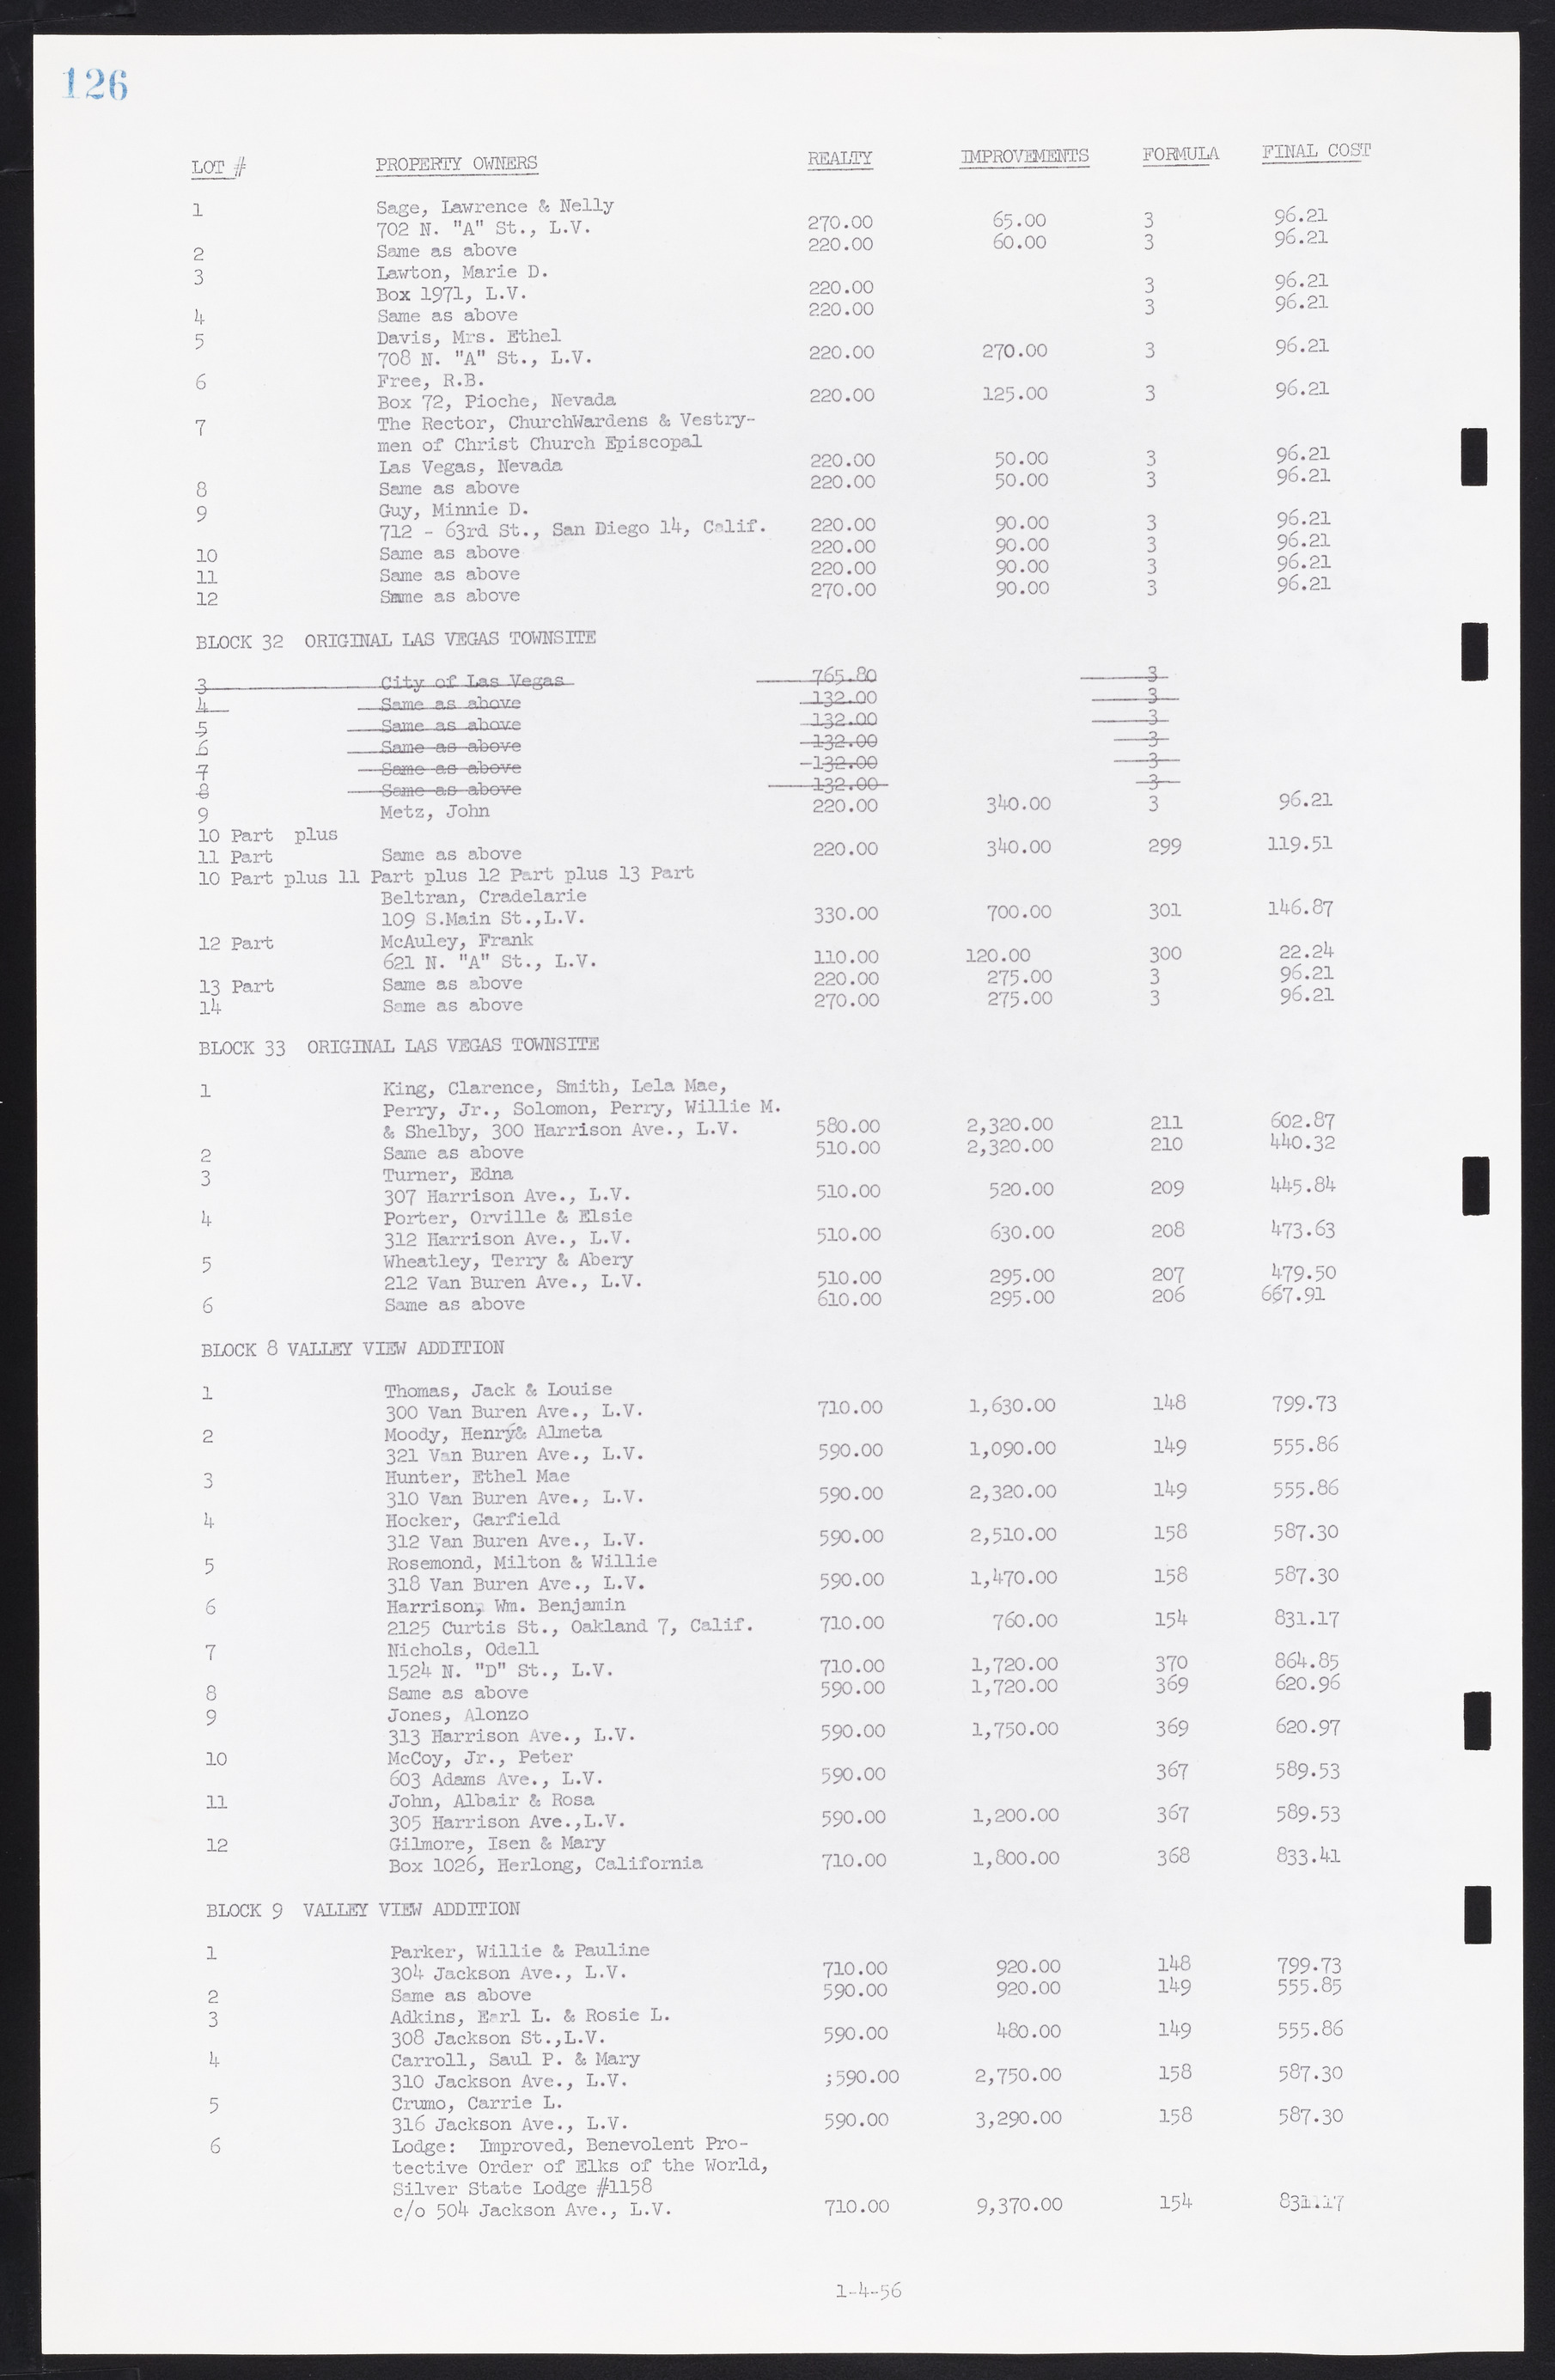 Las Vegas City Commission Minutes, September 21, 1955 to November 20, 1957, lvc000010-136